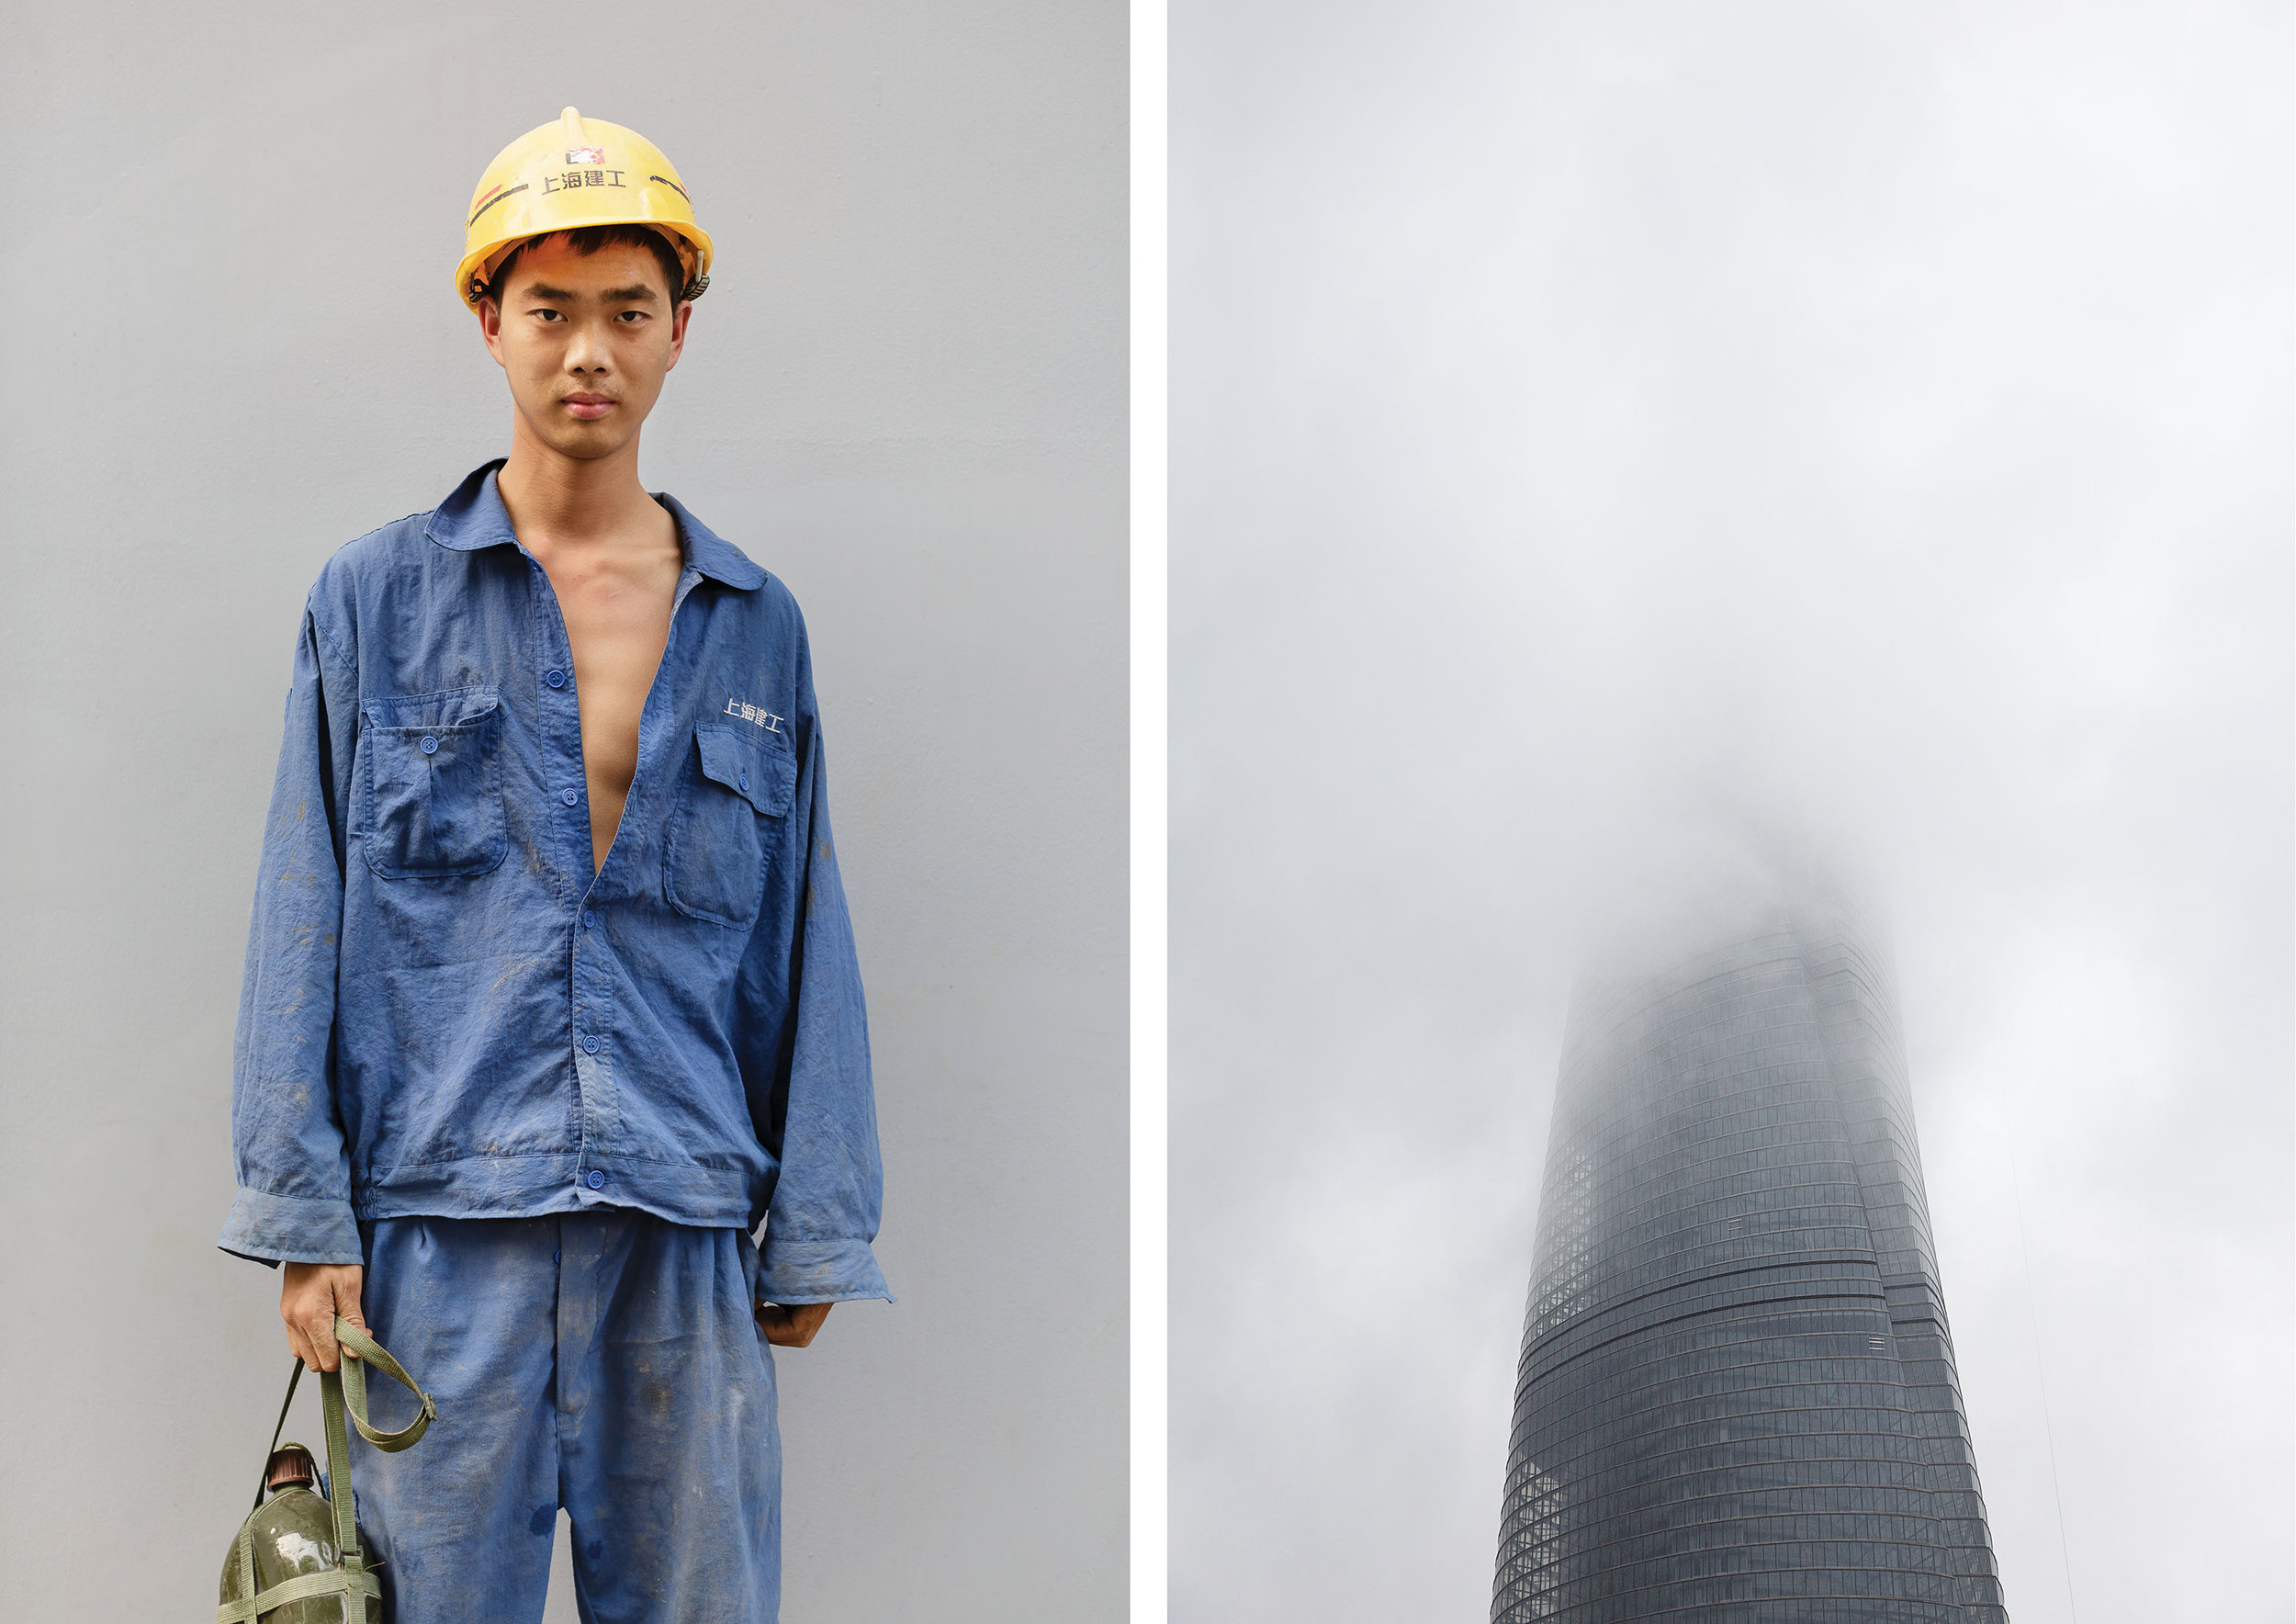 Shanghai_Tower-workers-and-building13.jpg